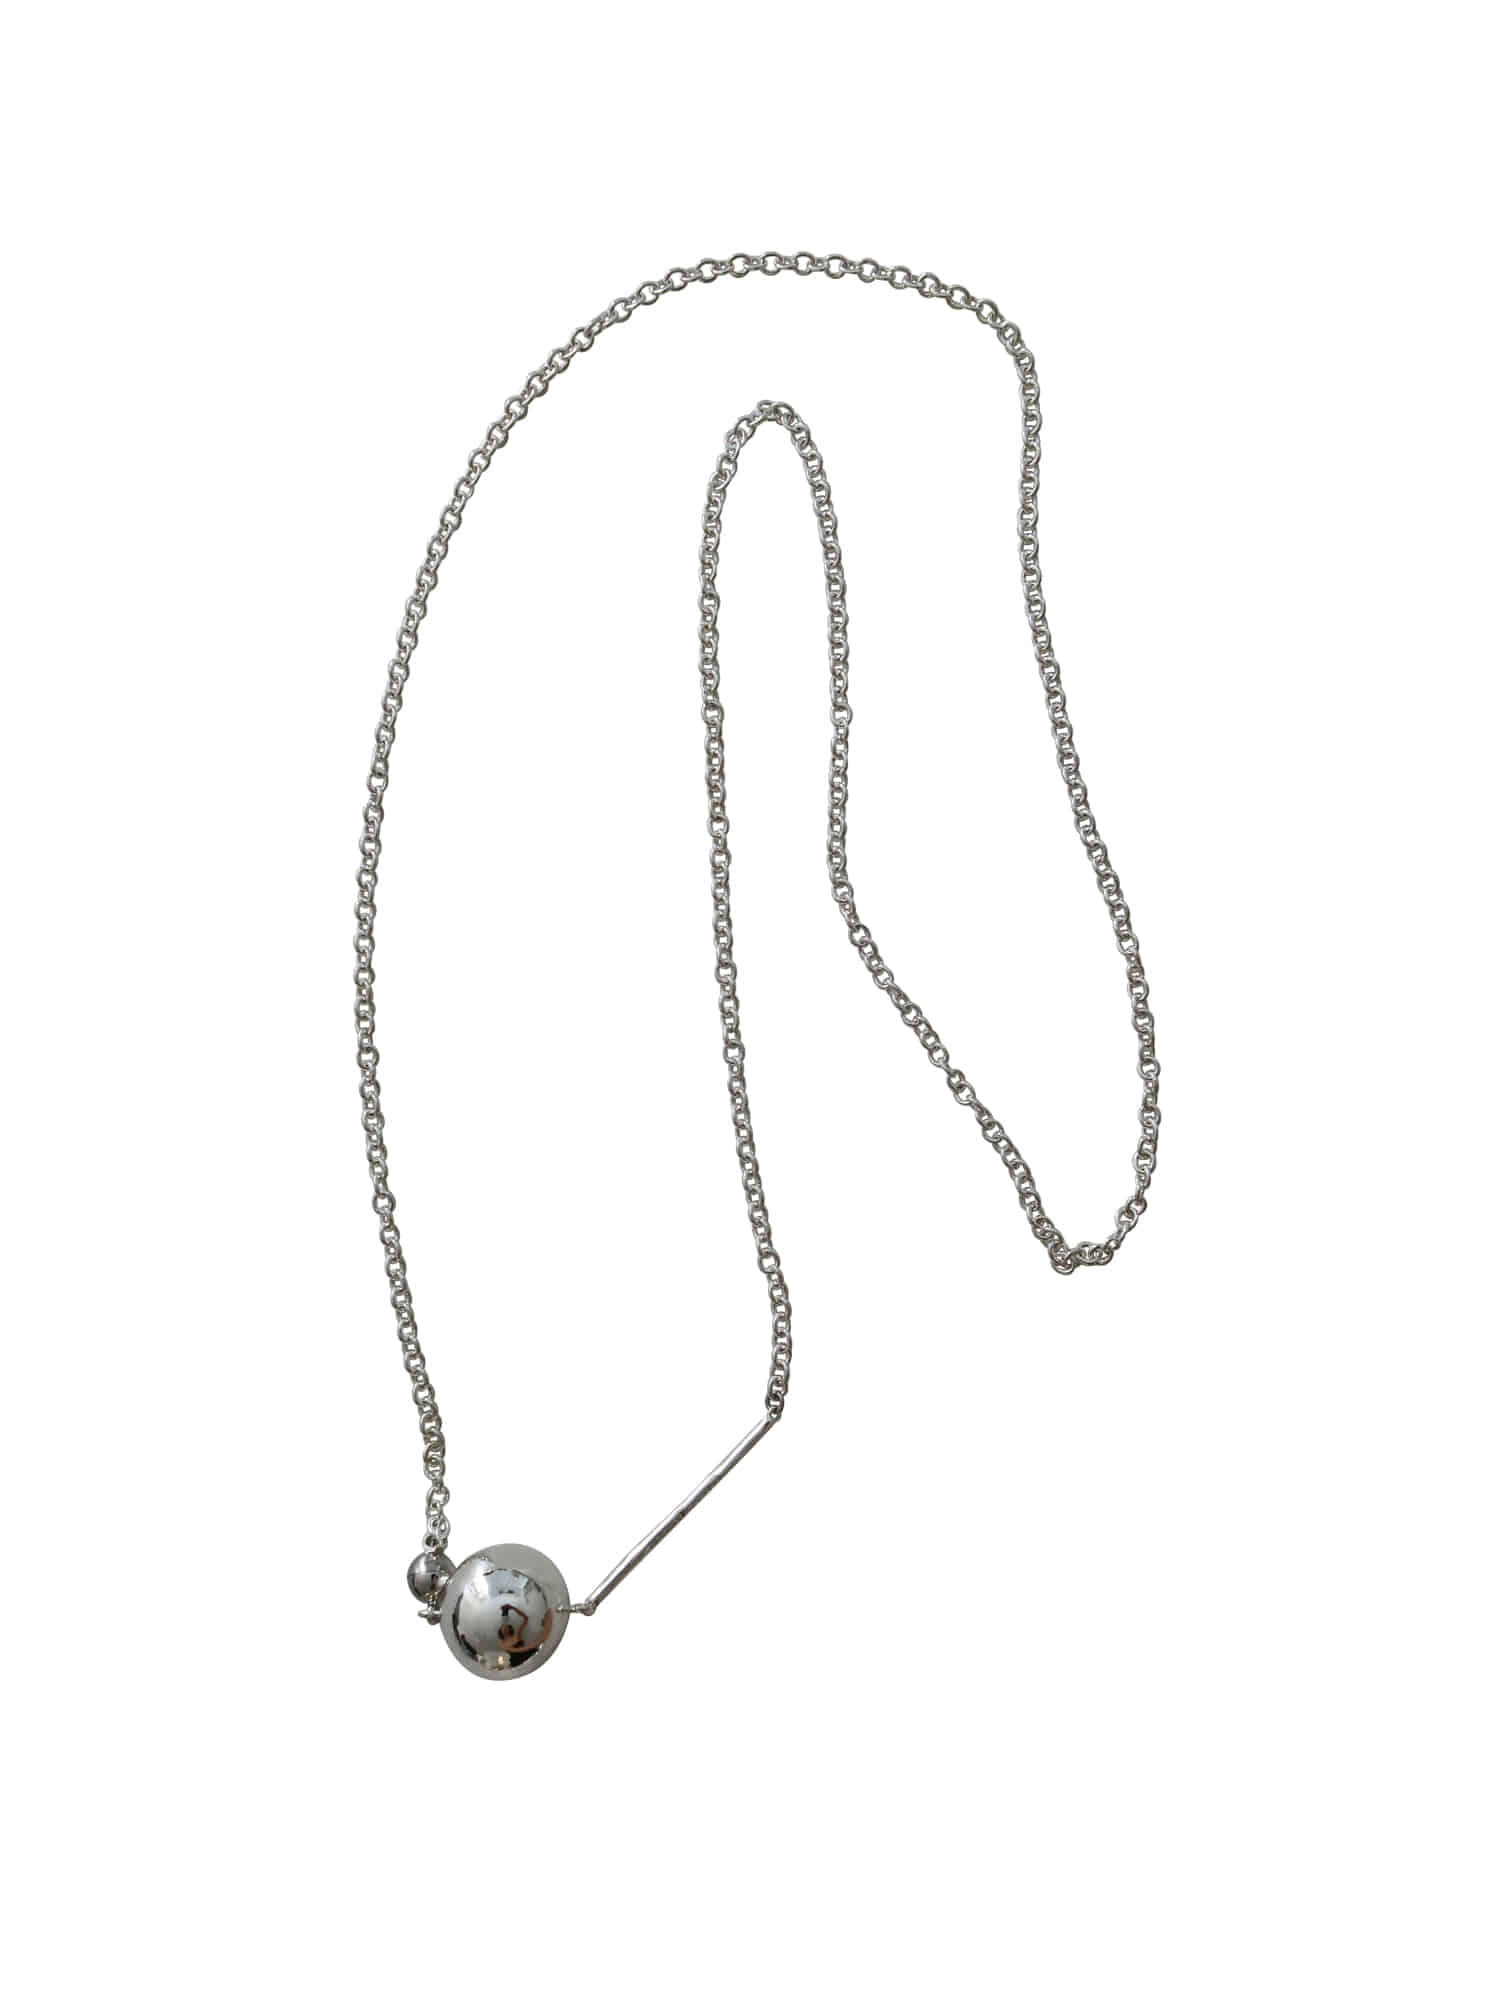 Rhythm Long Chain Necklace - Silver